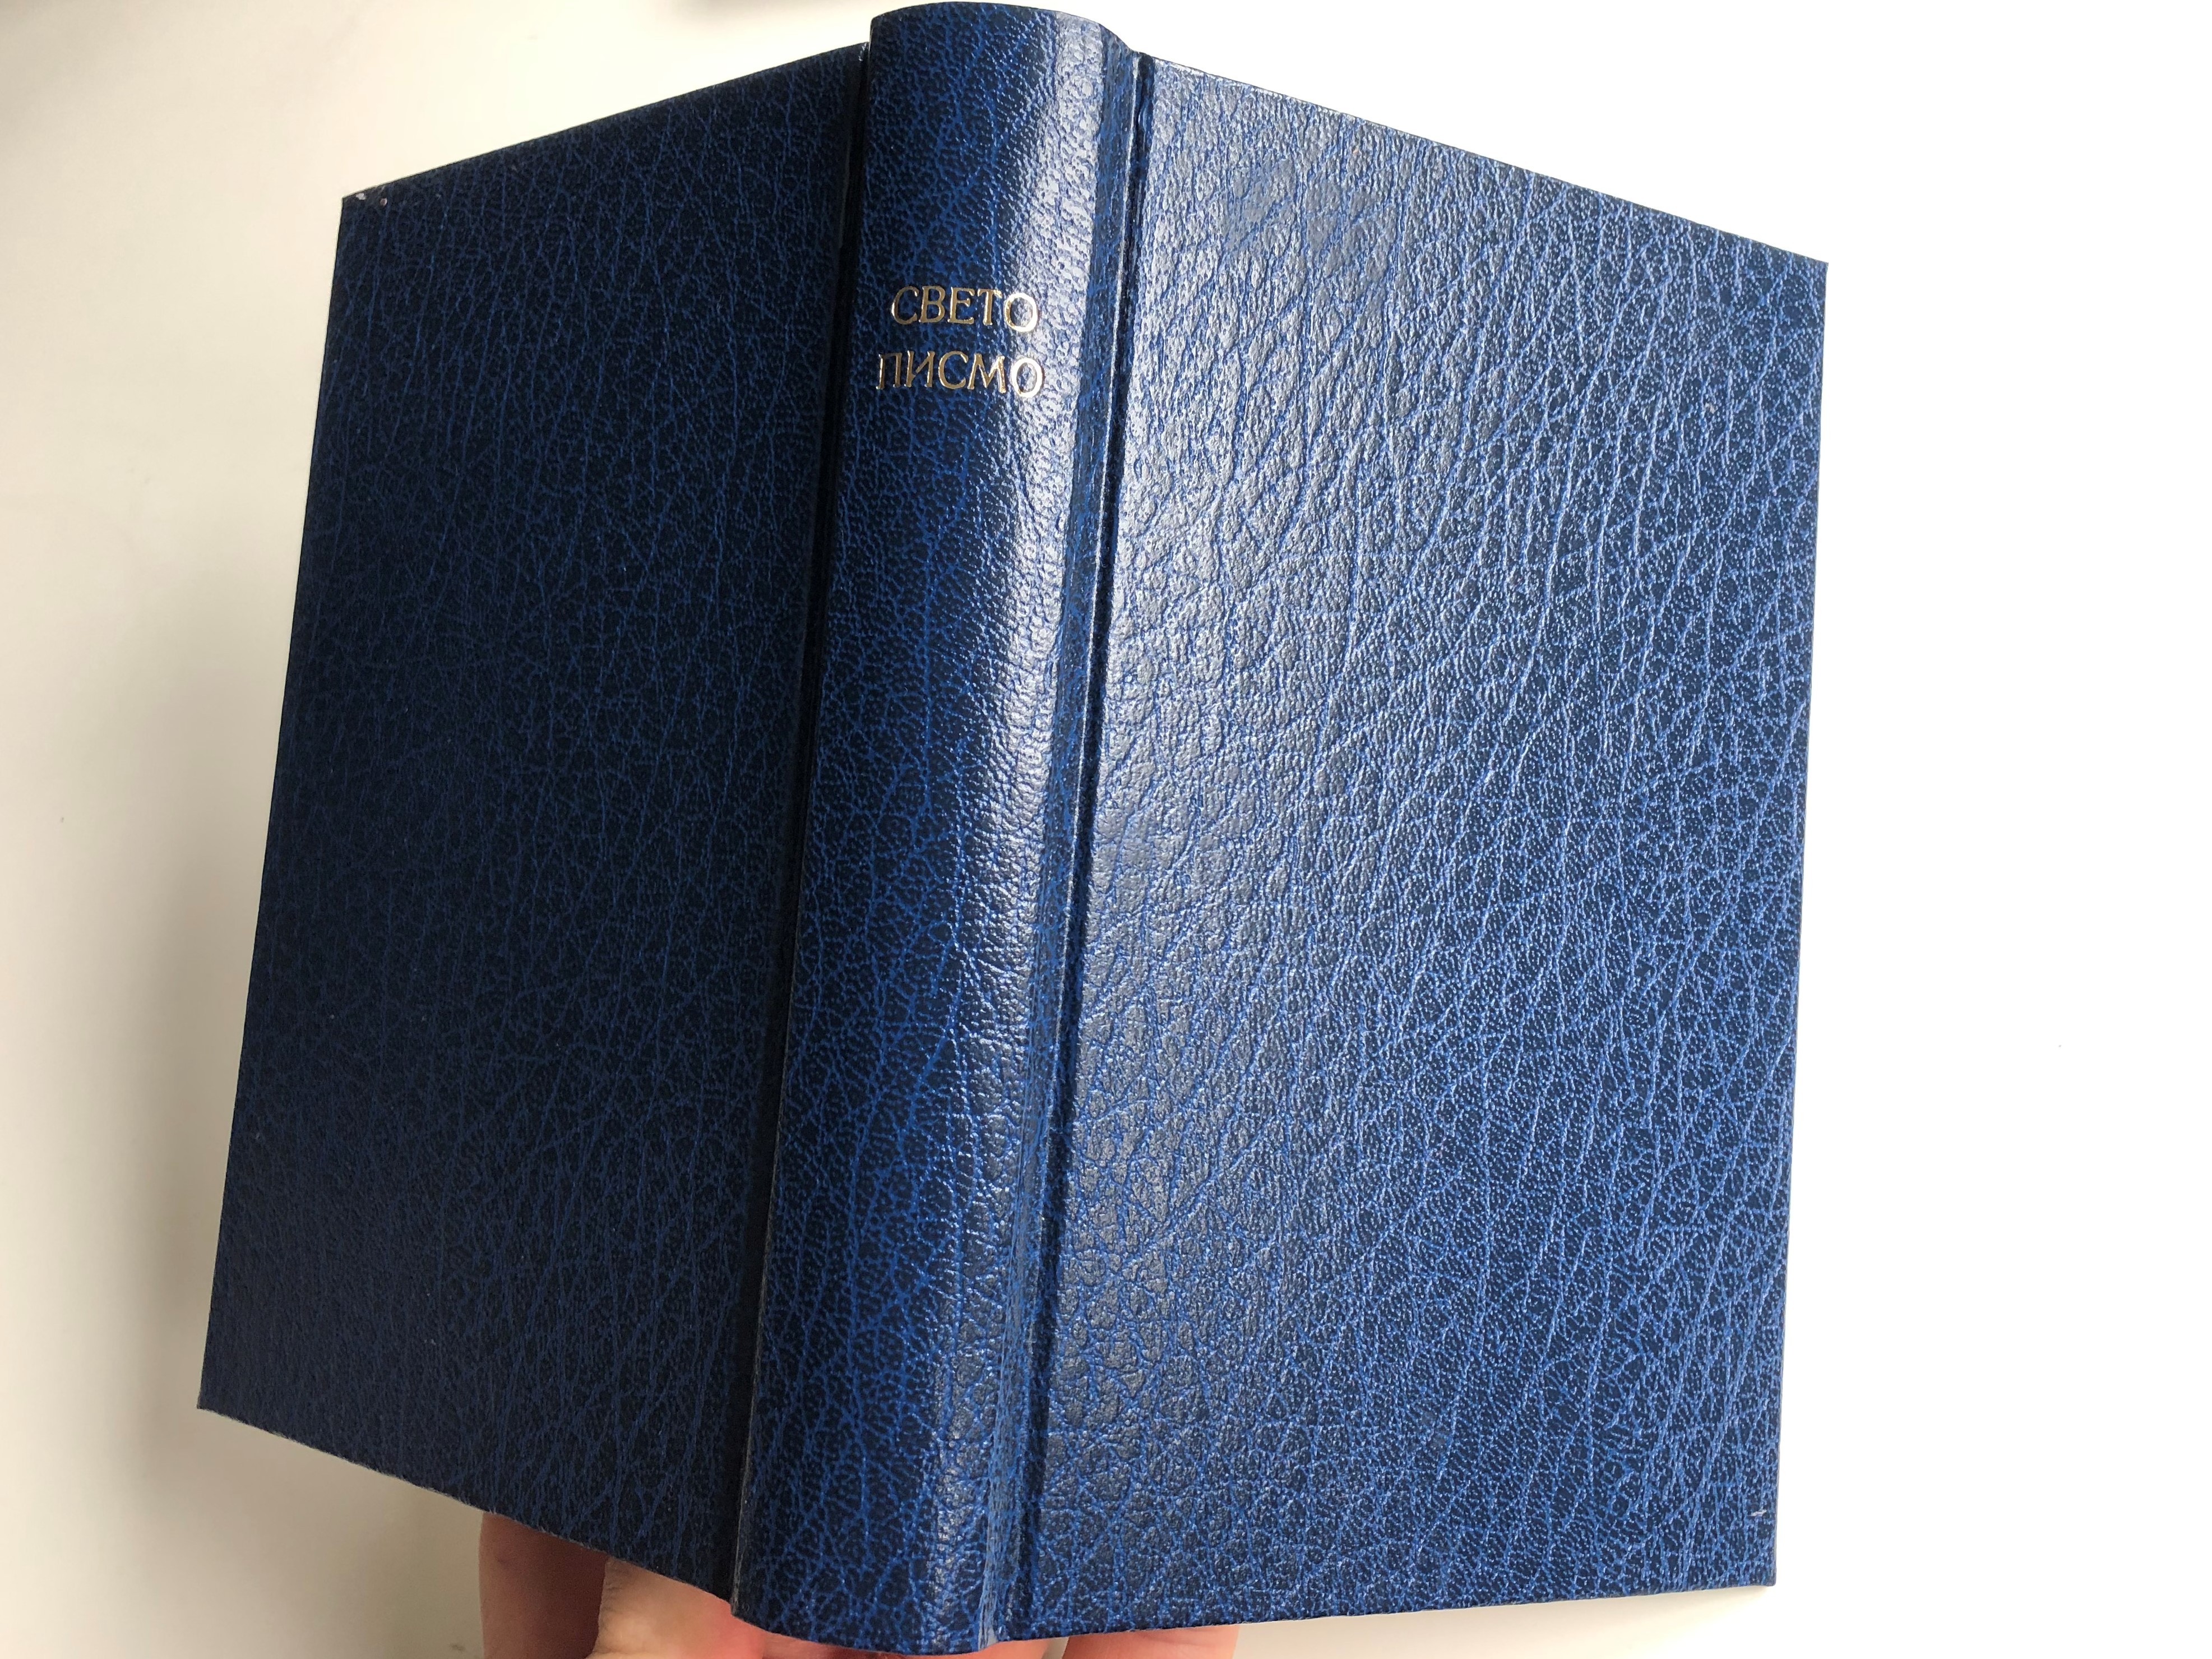 serbian-bible-sveto-pismo-biblija-043-blue-hardcover-1.jpg